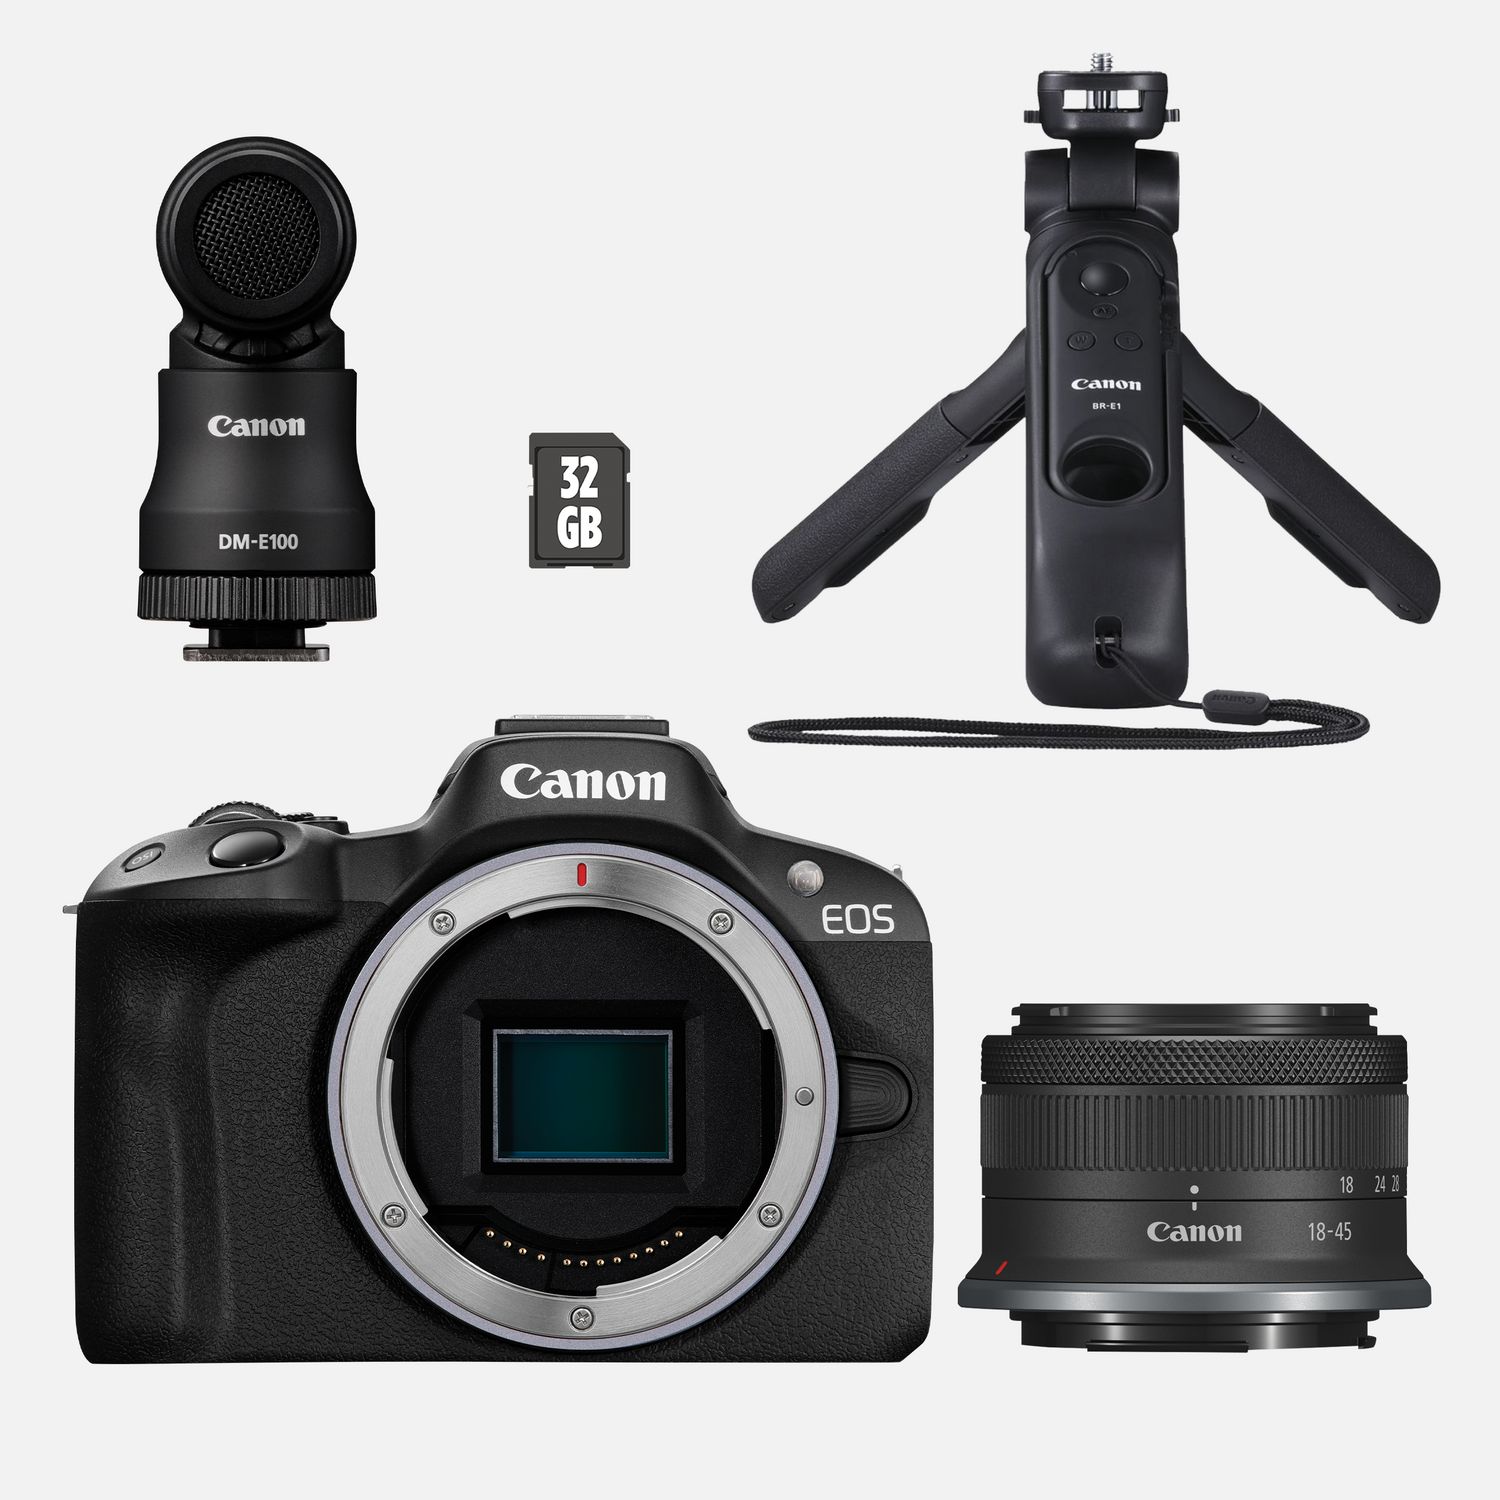 R50-systeemcamera zwart, kit voor vloggers Wifi-camera's — Nederland Store